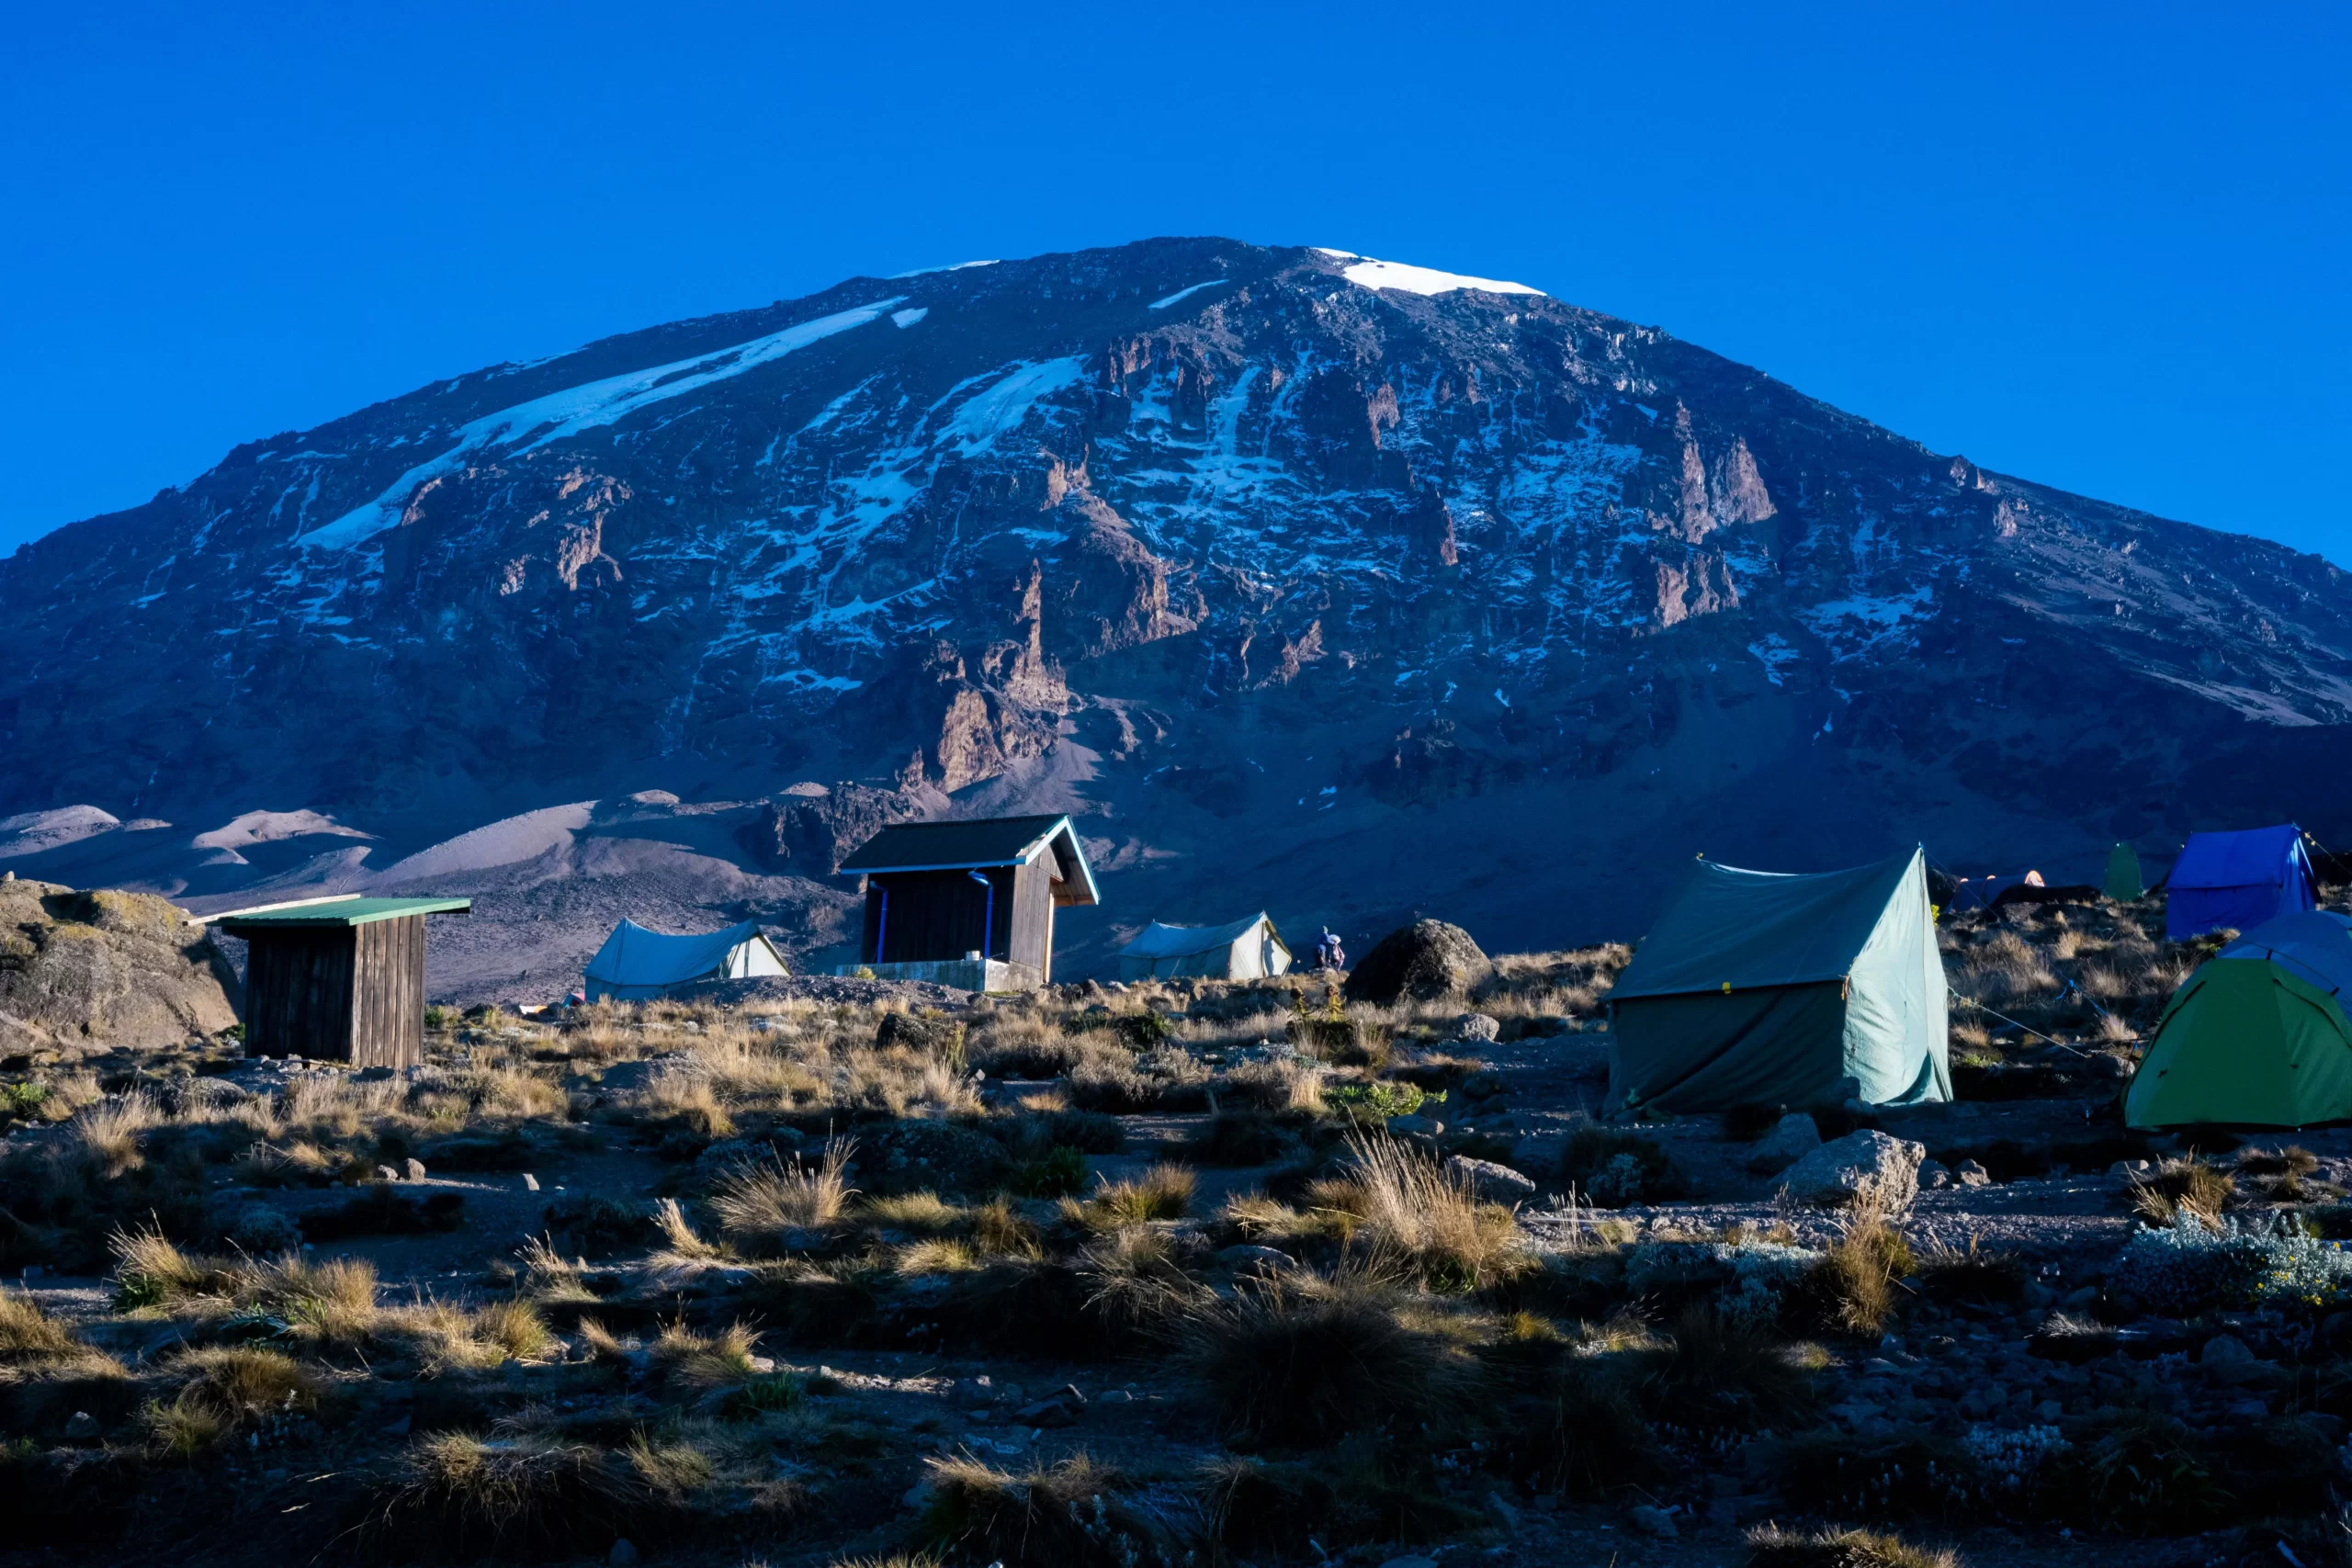 Kilimanjaro Londorossi Route 9 Days